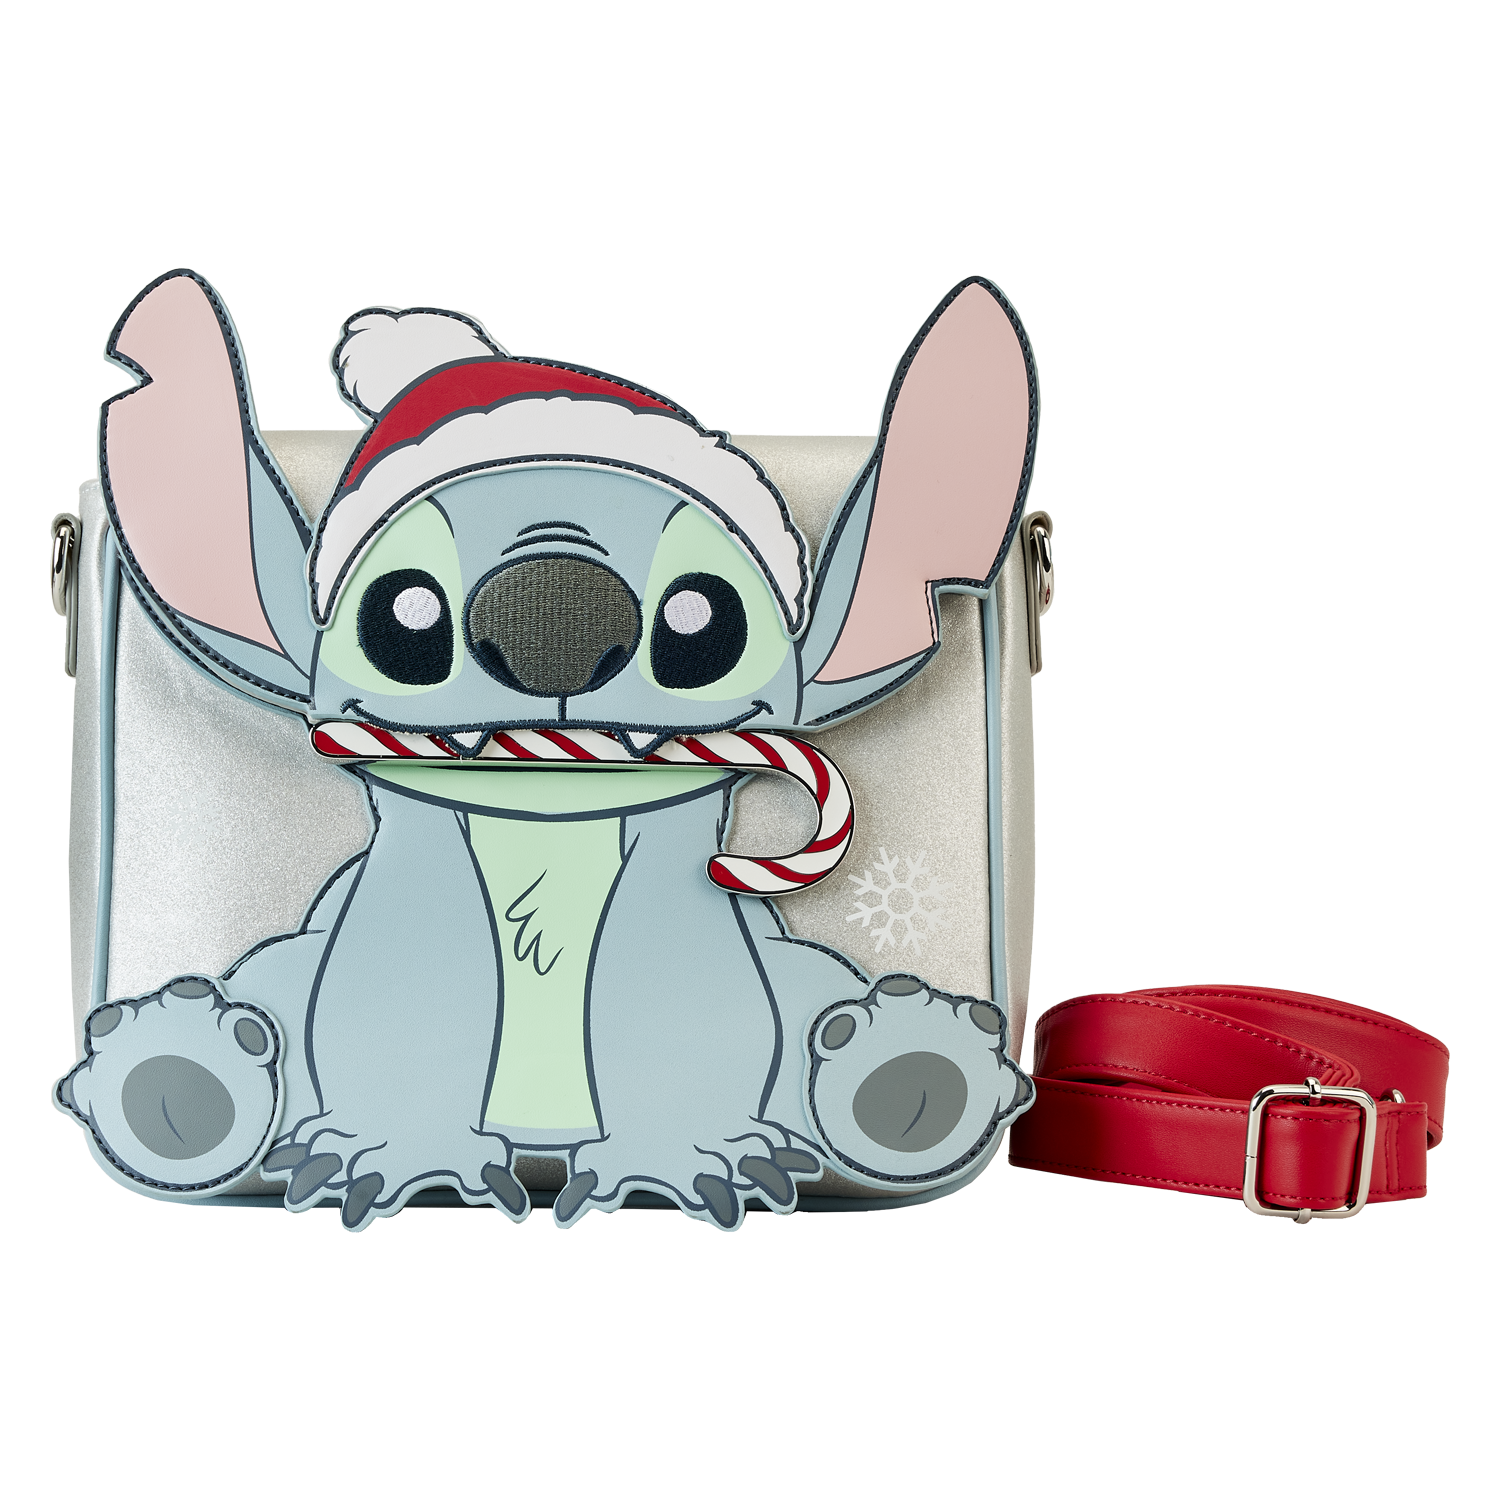 Buy Stitch Holiday Glitter Crossbody Bag at Loungefly.